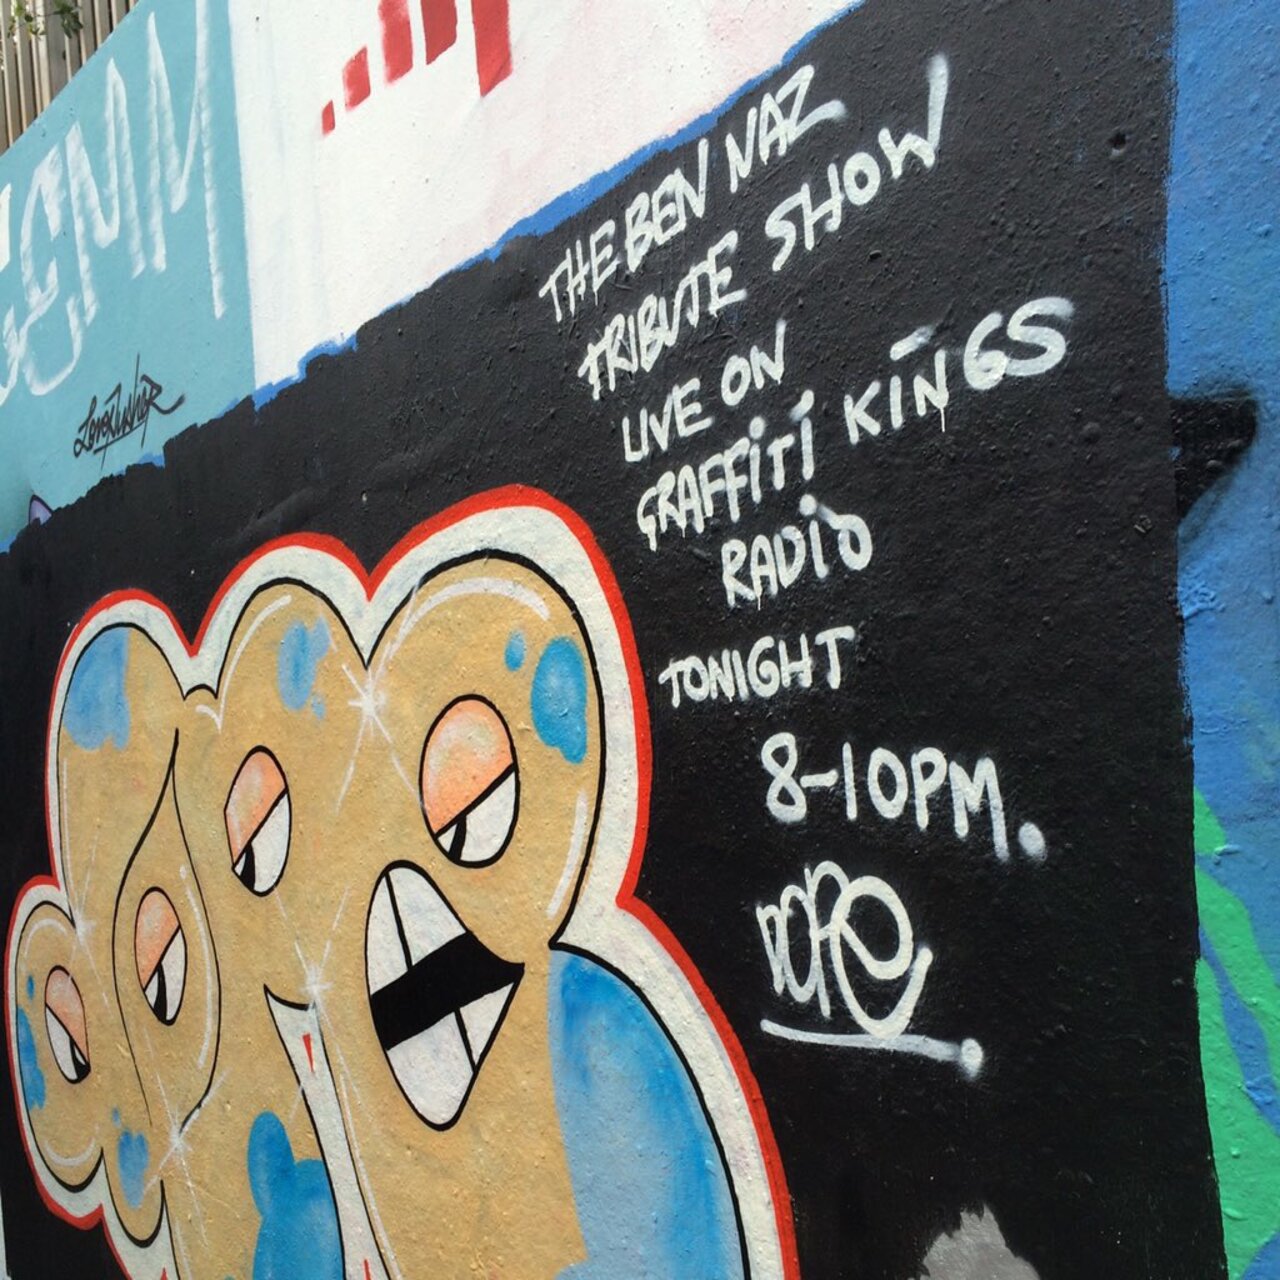 Going live on graffiti kings radio in 15 mins #dope #bennaz #streetart #graffiti #dopeism https://t.co/Z45uHmN59B